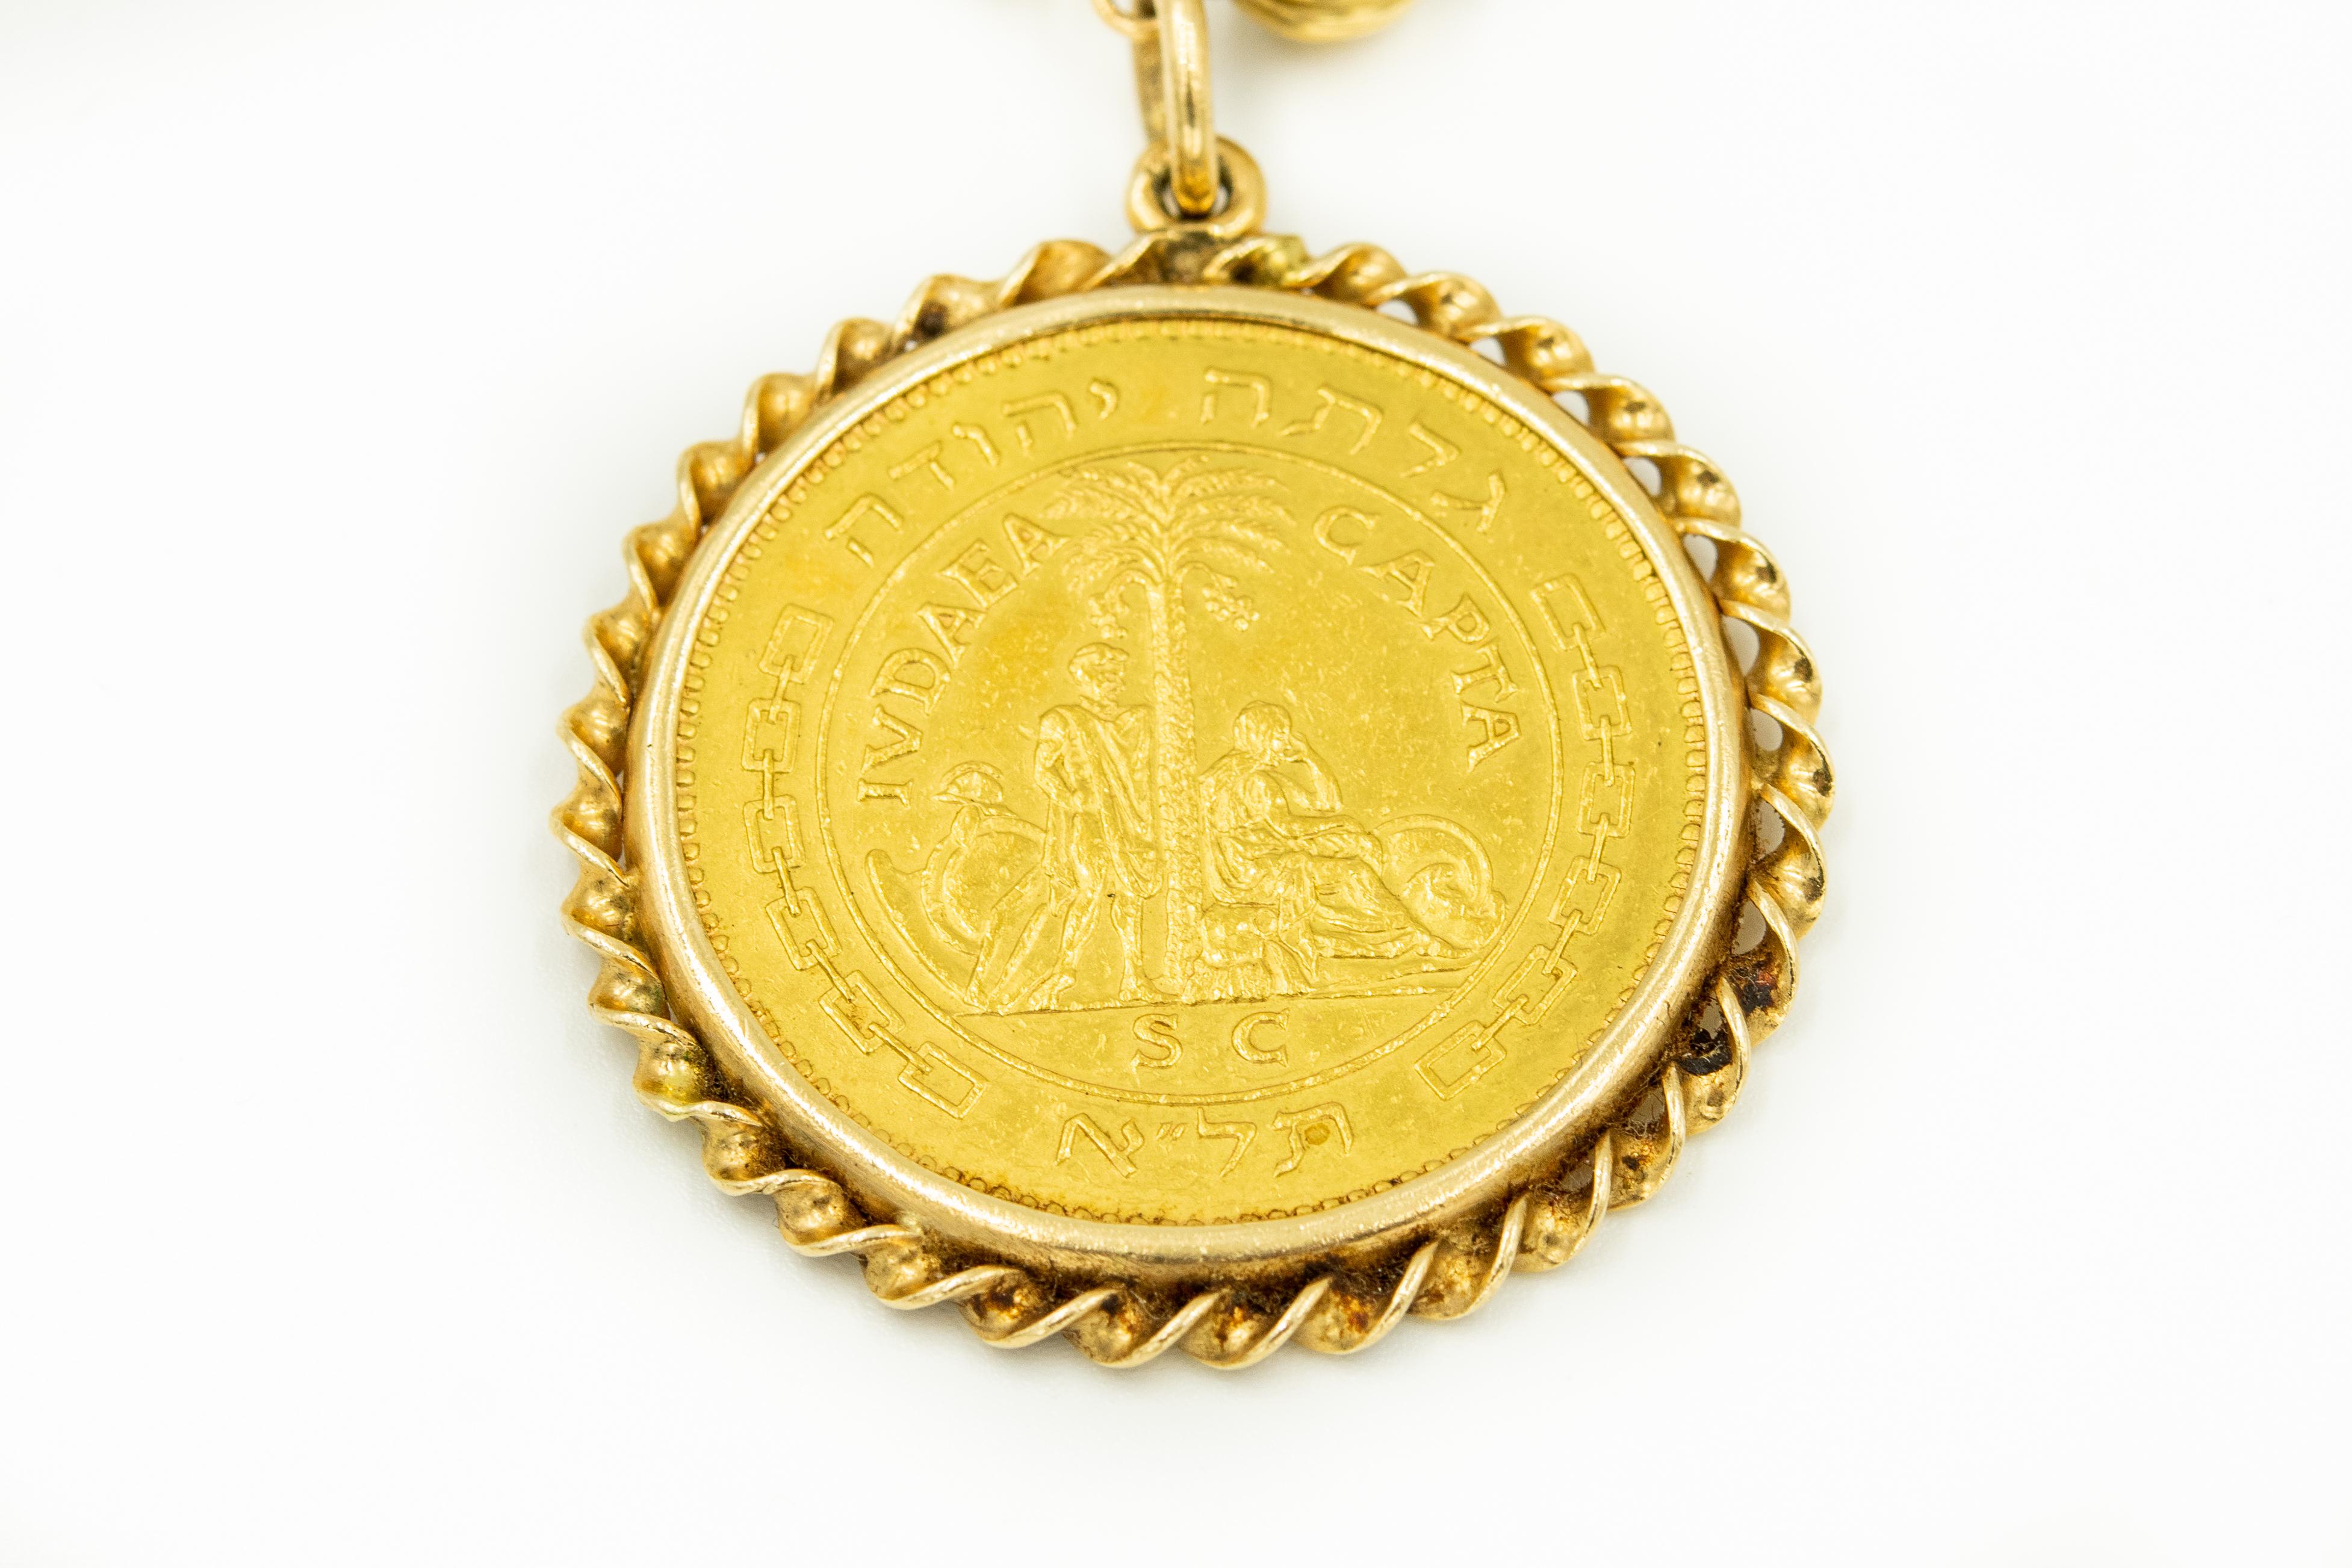 Bead Cultured Pearl 14 Karat Yellow Gold Charm Bracelet with Israel Liberata Medal